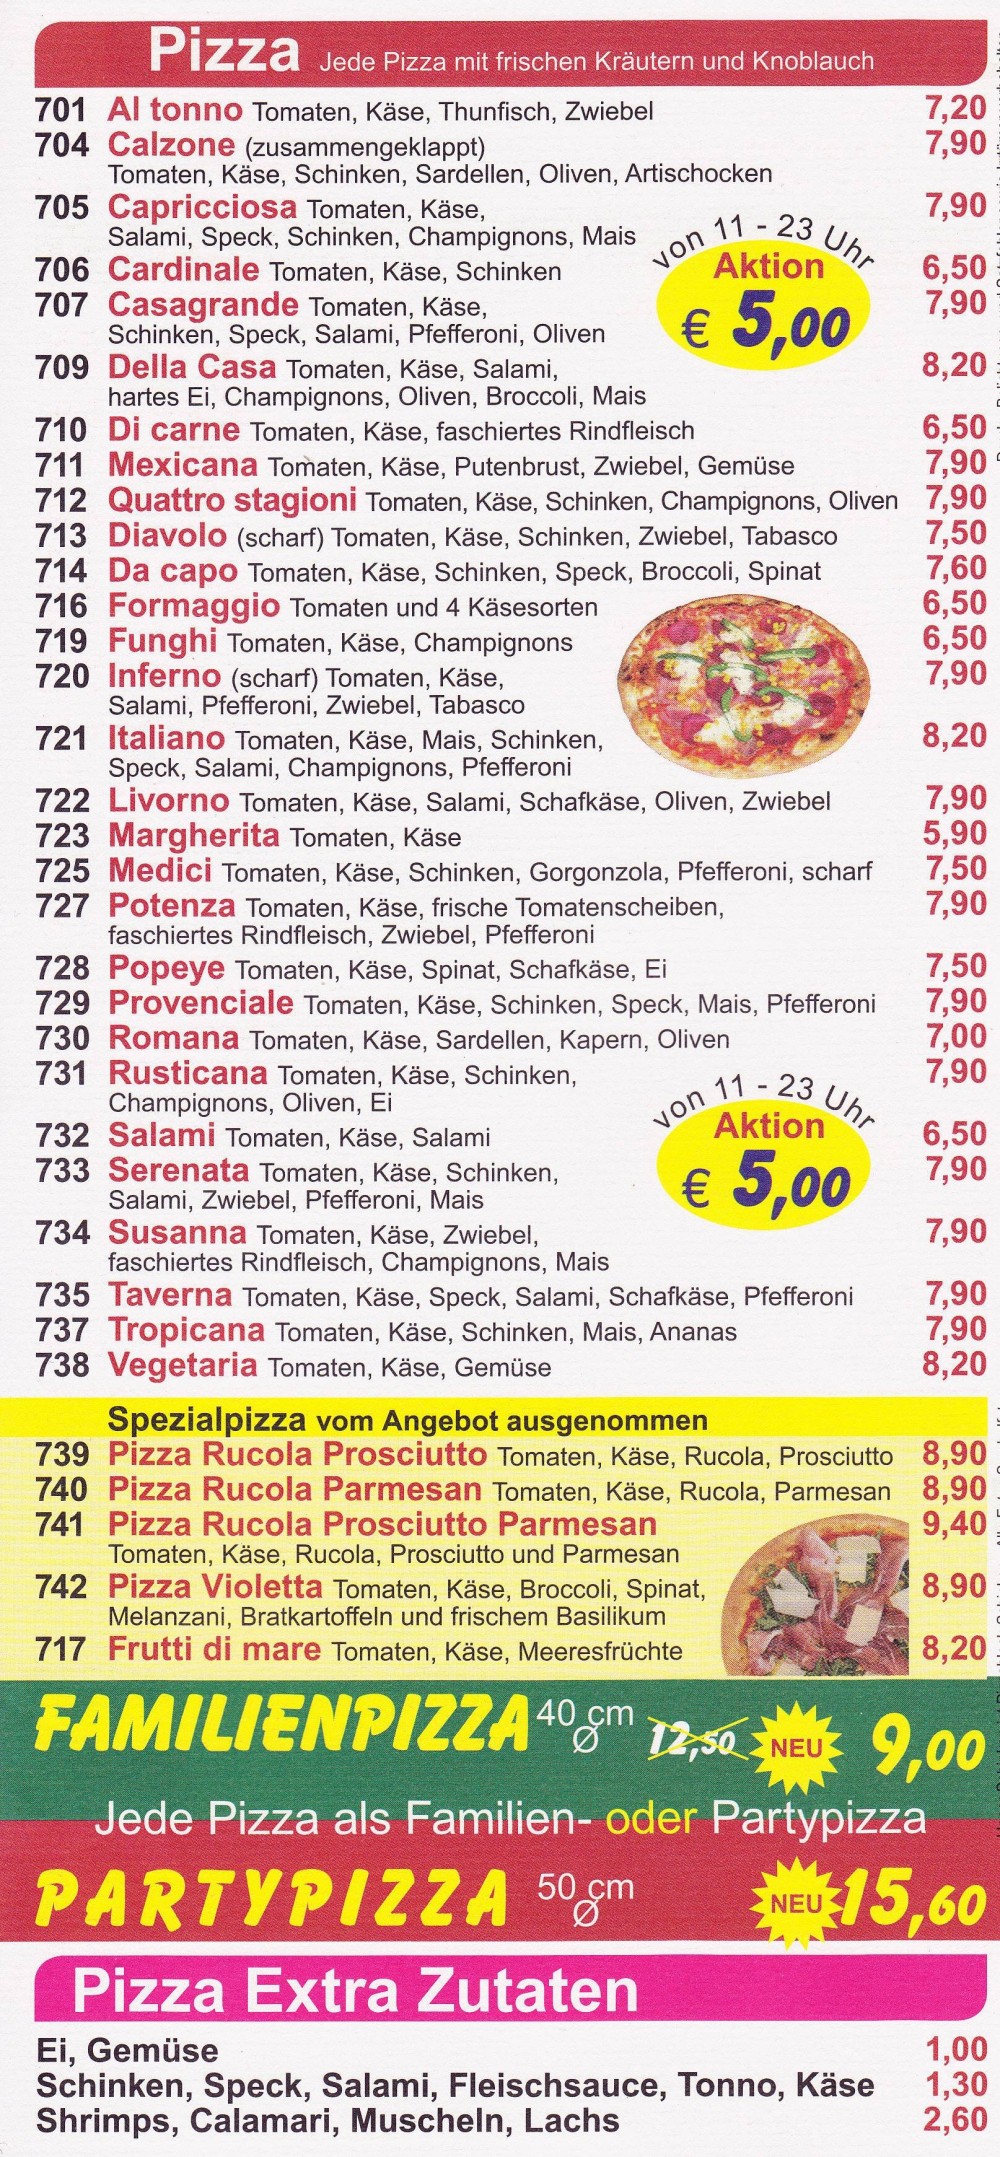 Camorra Flyer Seite 5 - Pizzeria Camorra - Schnitzel Diana - Wien